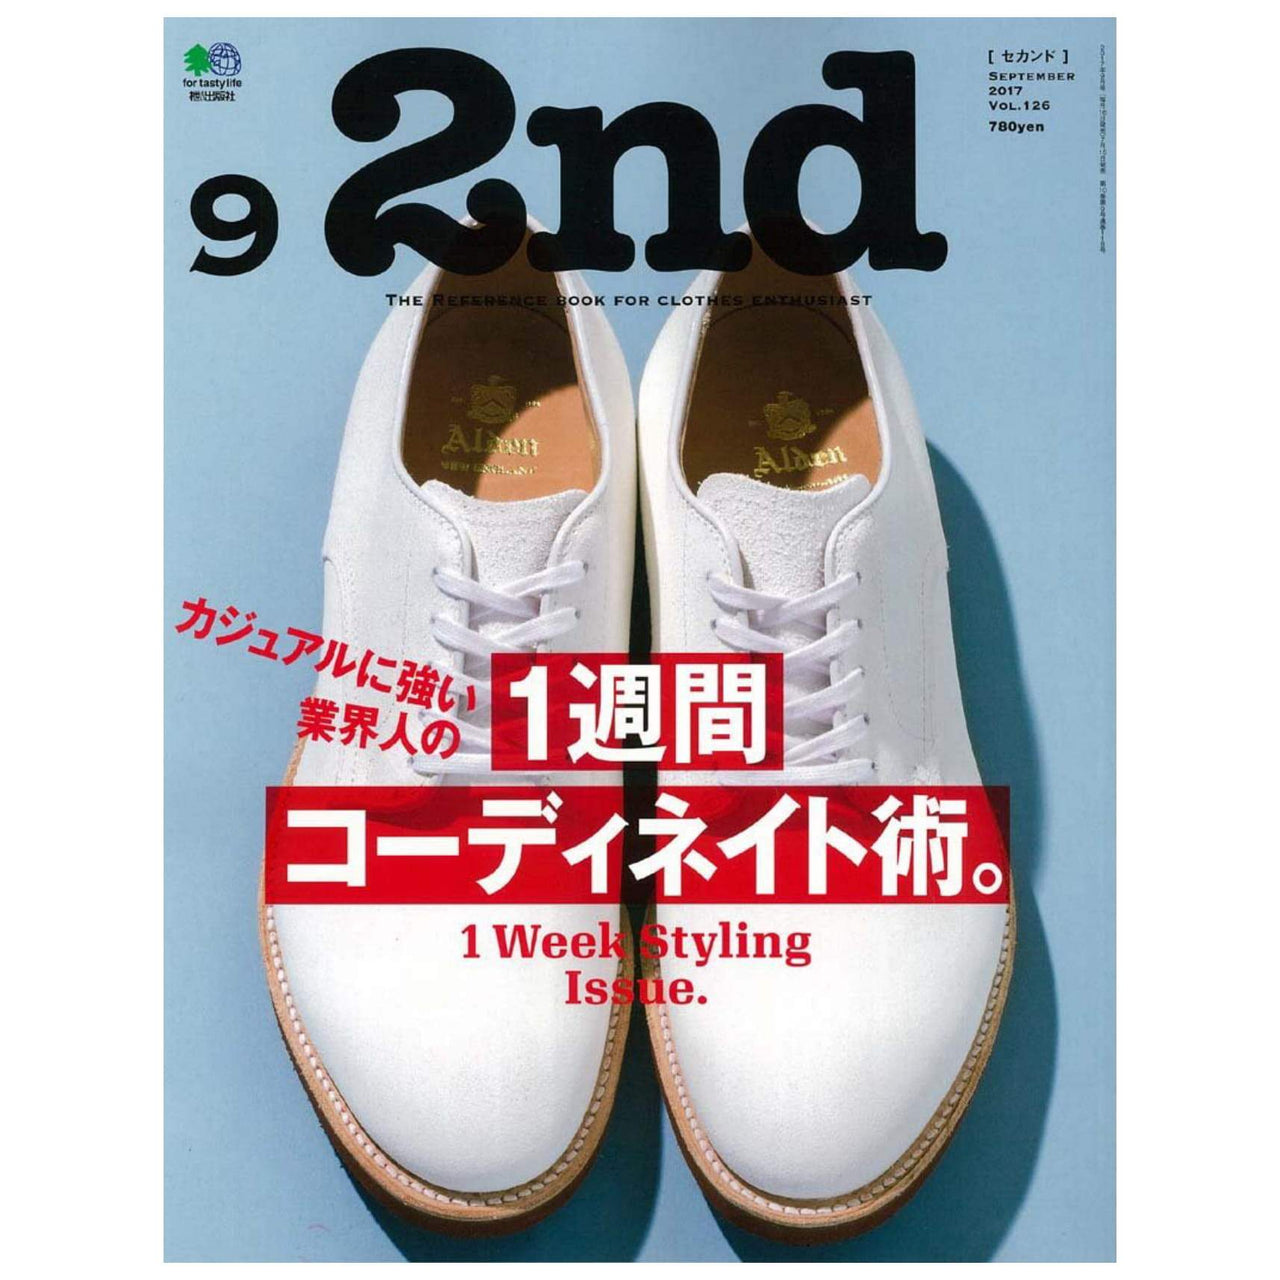 2nd Vol.126 "1 Week Styling"-Magazine-Clutch Cafe